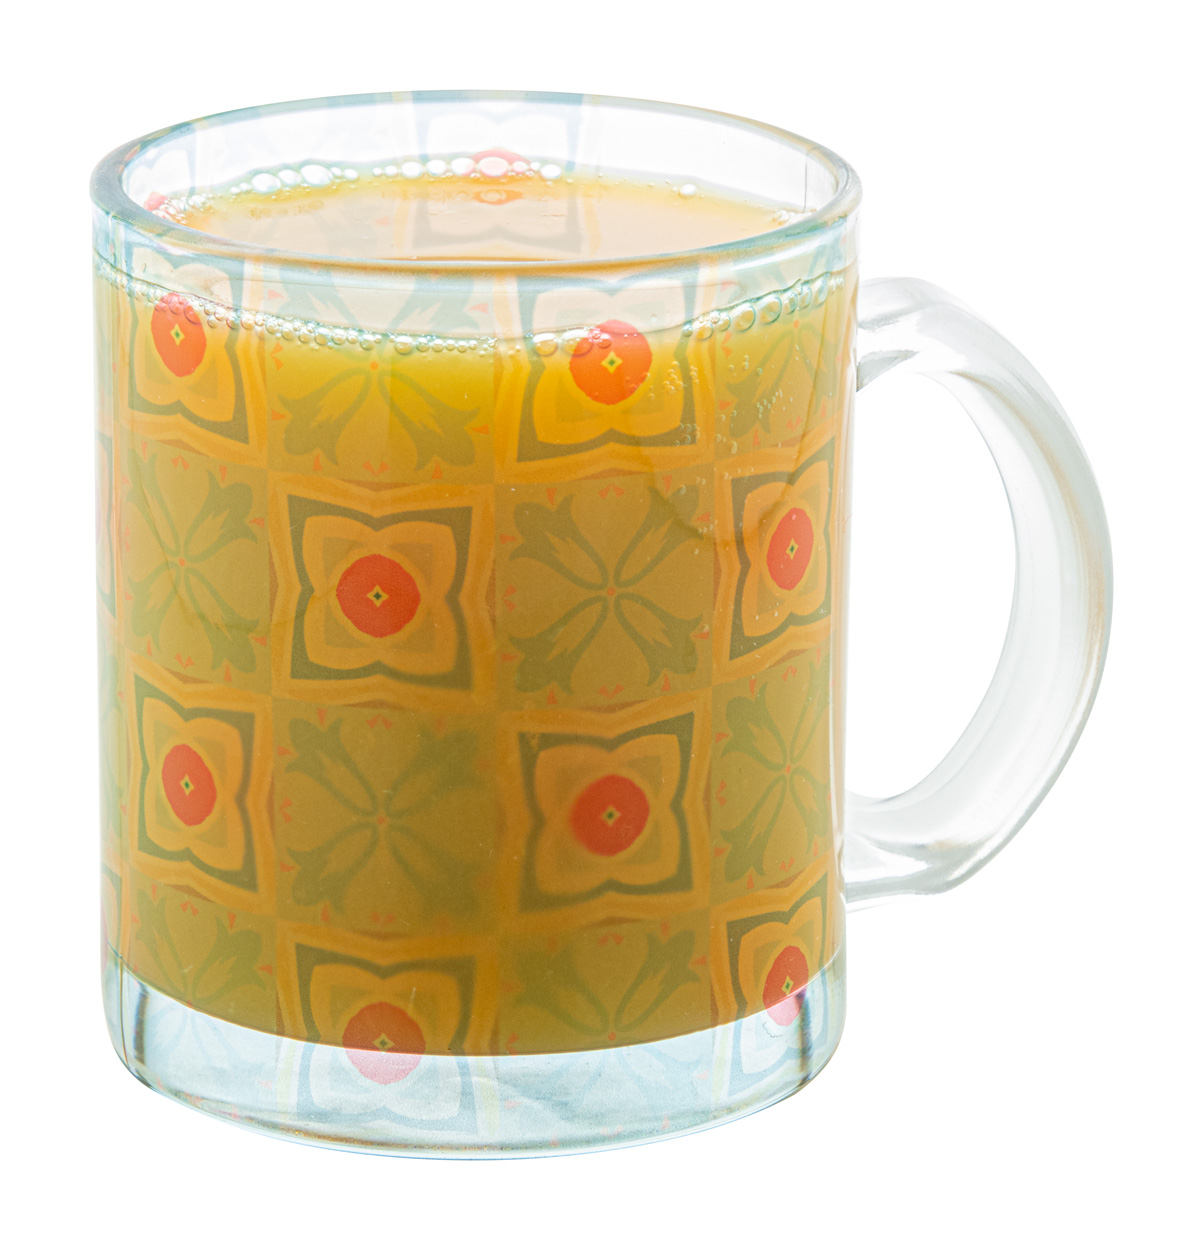 Glass mug for sublimation THROUSUB, 300 ml - transparent